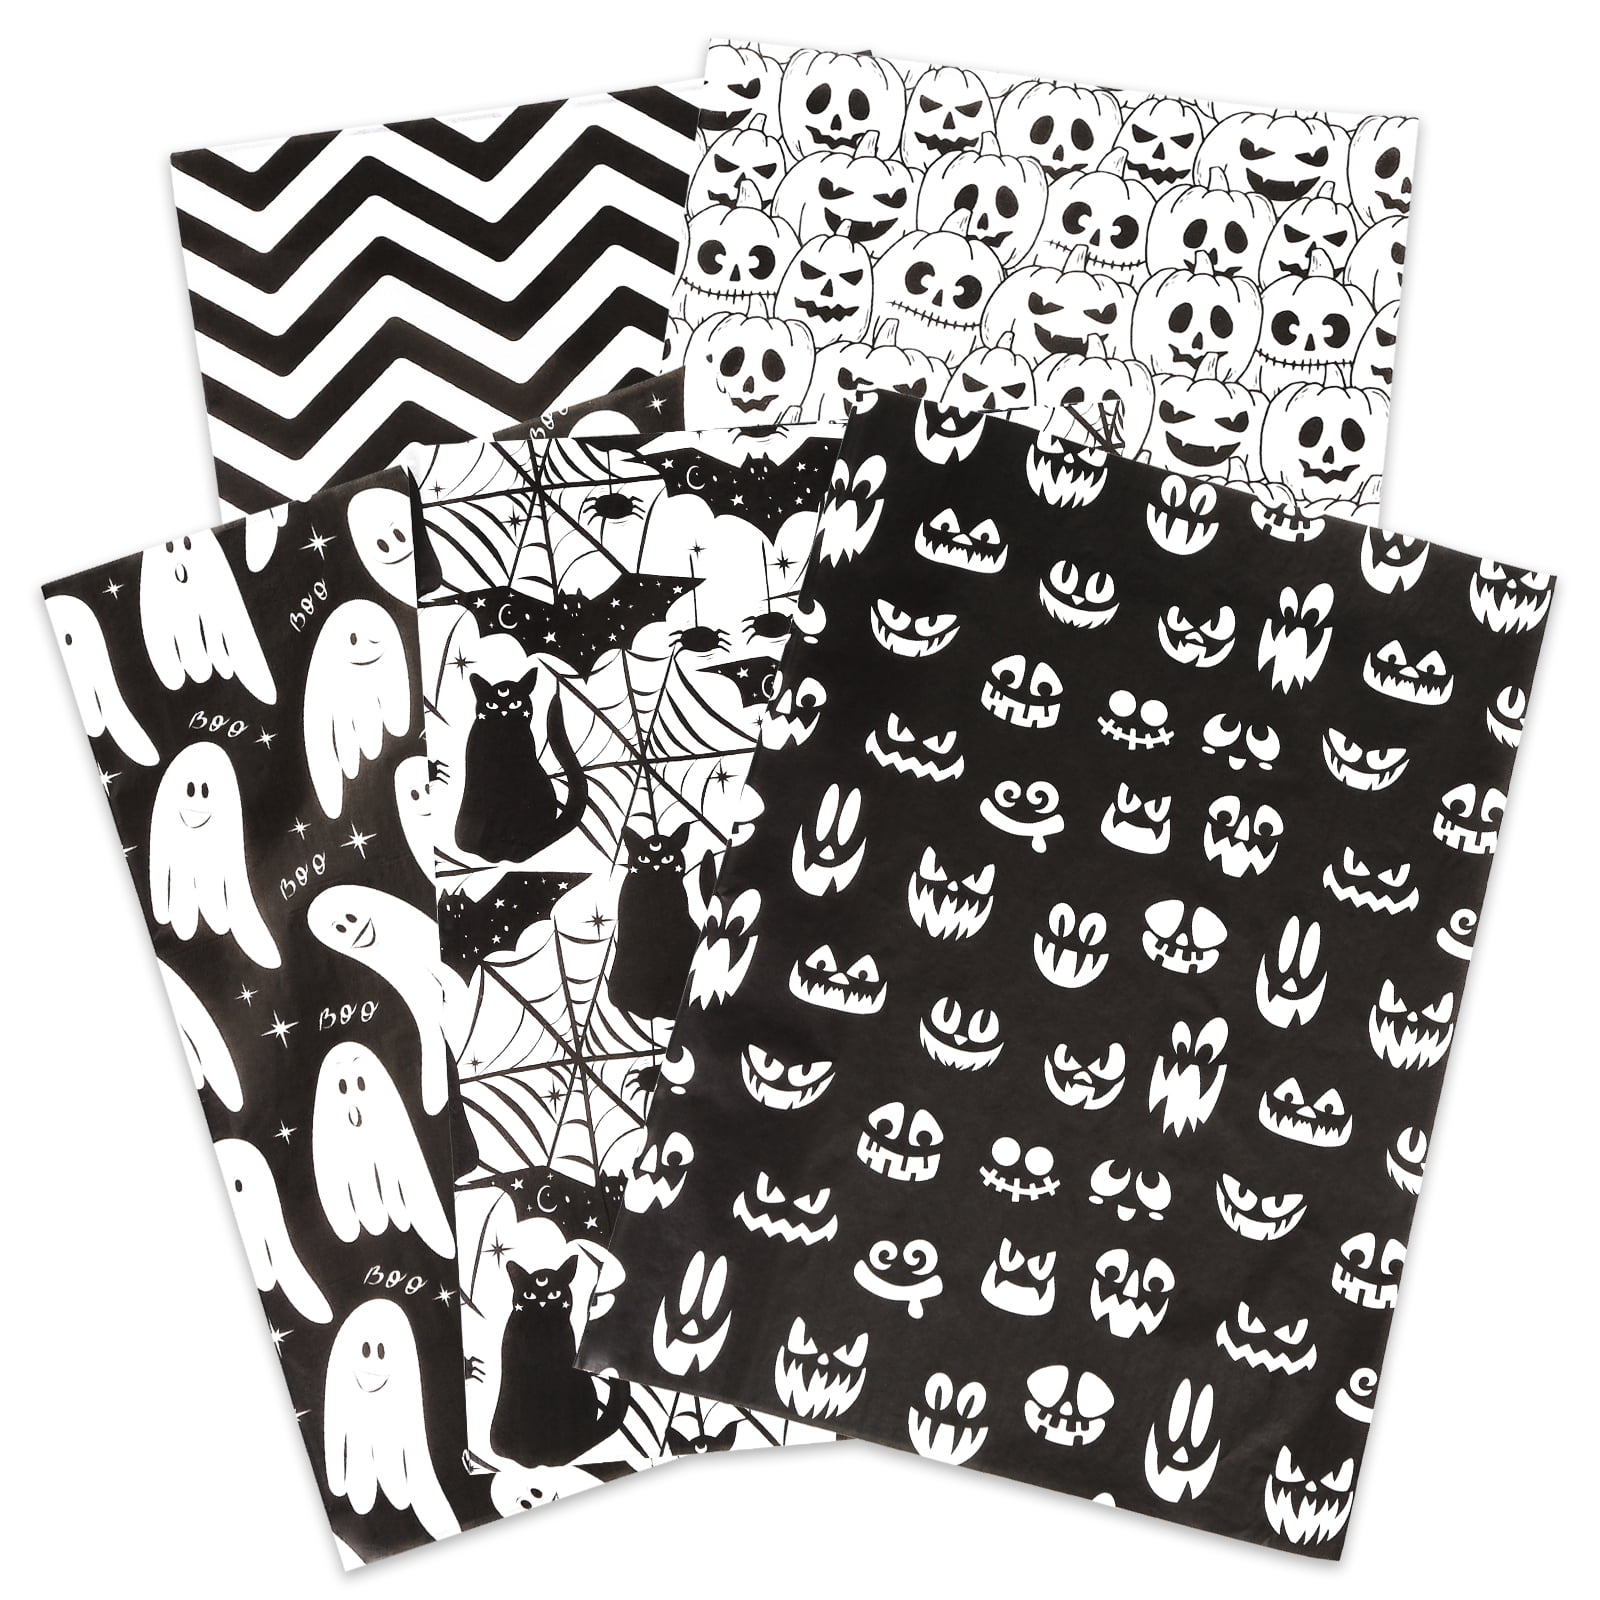  MR FIVE 60 Sheets Black Halloween Tissue Paper Bulk,20x  14,Halloween Skull Tissue Paper for Gift Bags,Black with White Skull  Spider Web Pattern Tissue Paper,Black Tissue Paper for Halloween Party :  Health